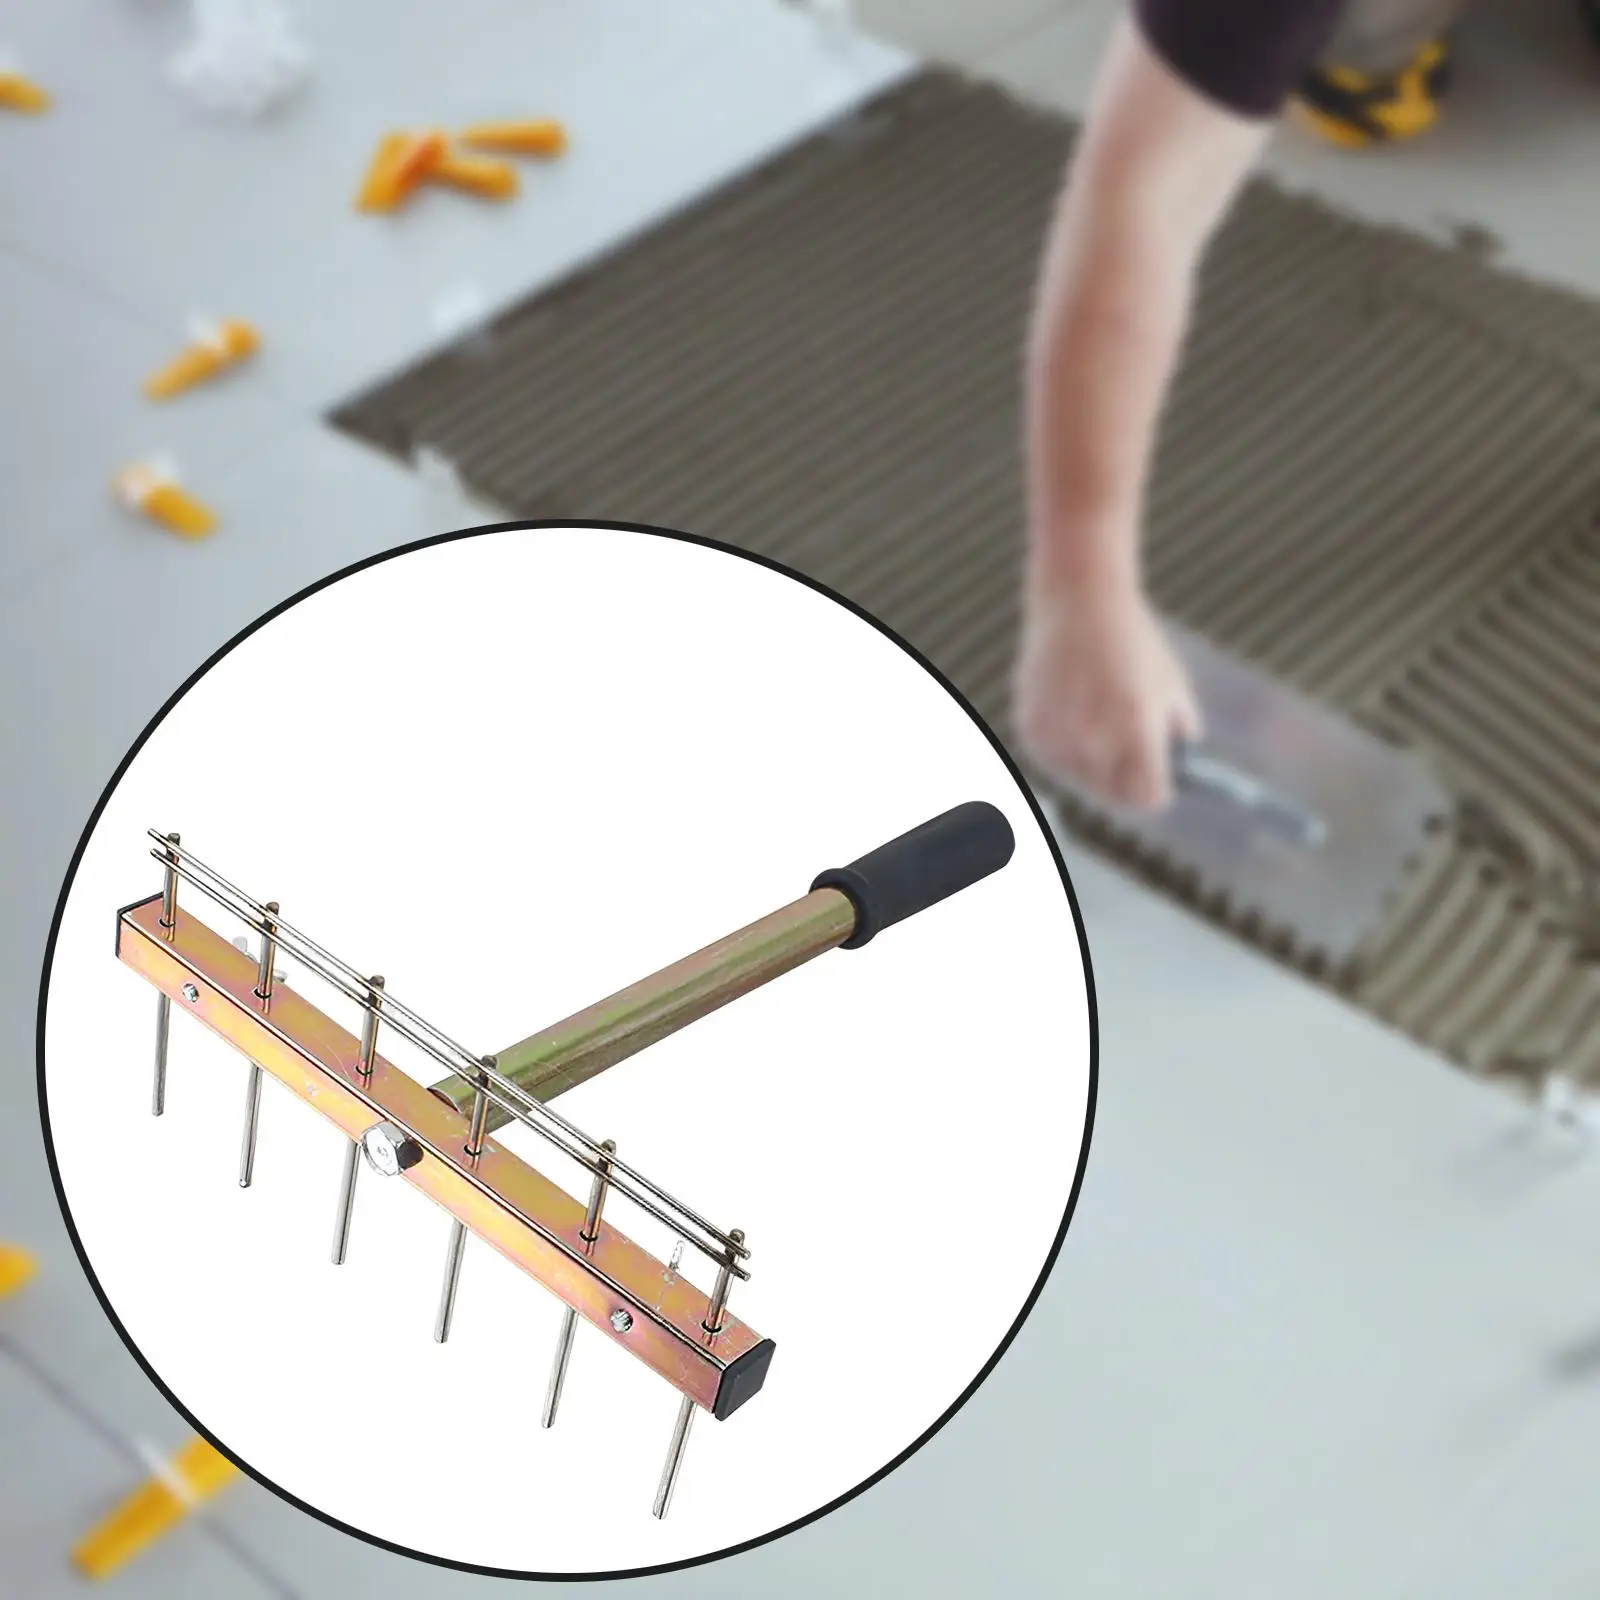 Tiles Trowel High Precision Practical Notch Trowel Multifunctional Professional Tiles Flooring Hand Trowel Tiling Flat Leveling